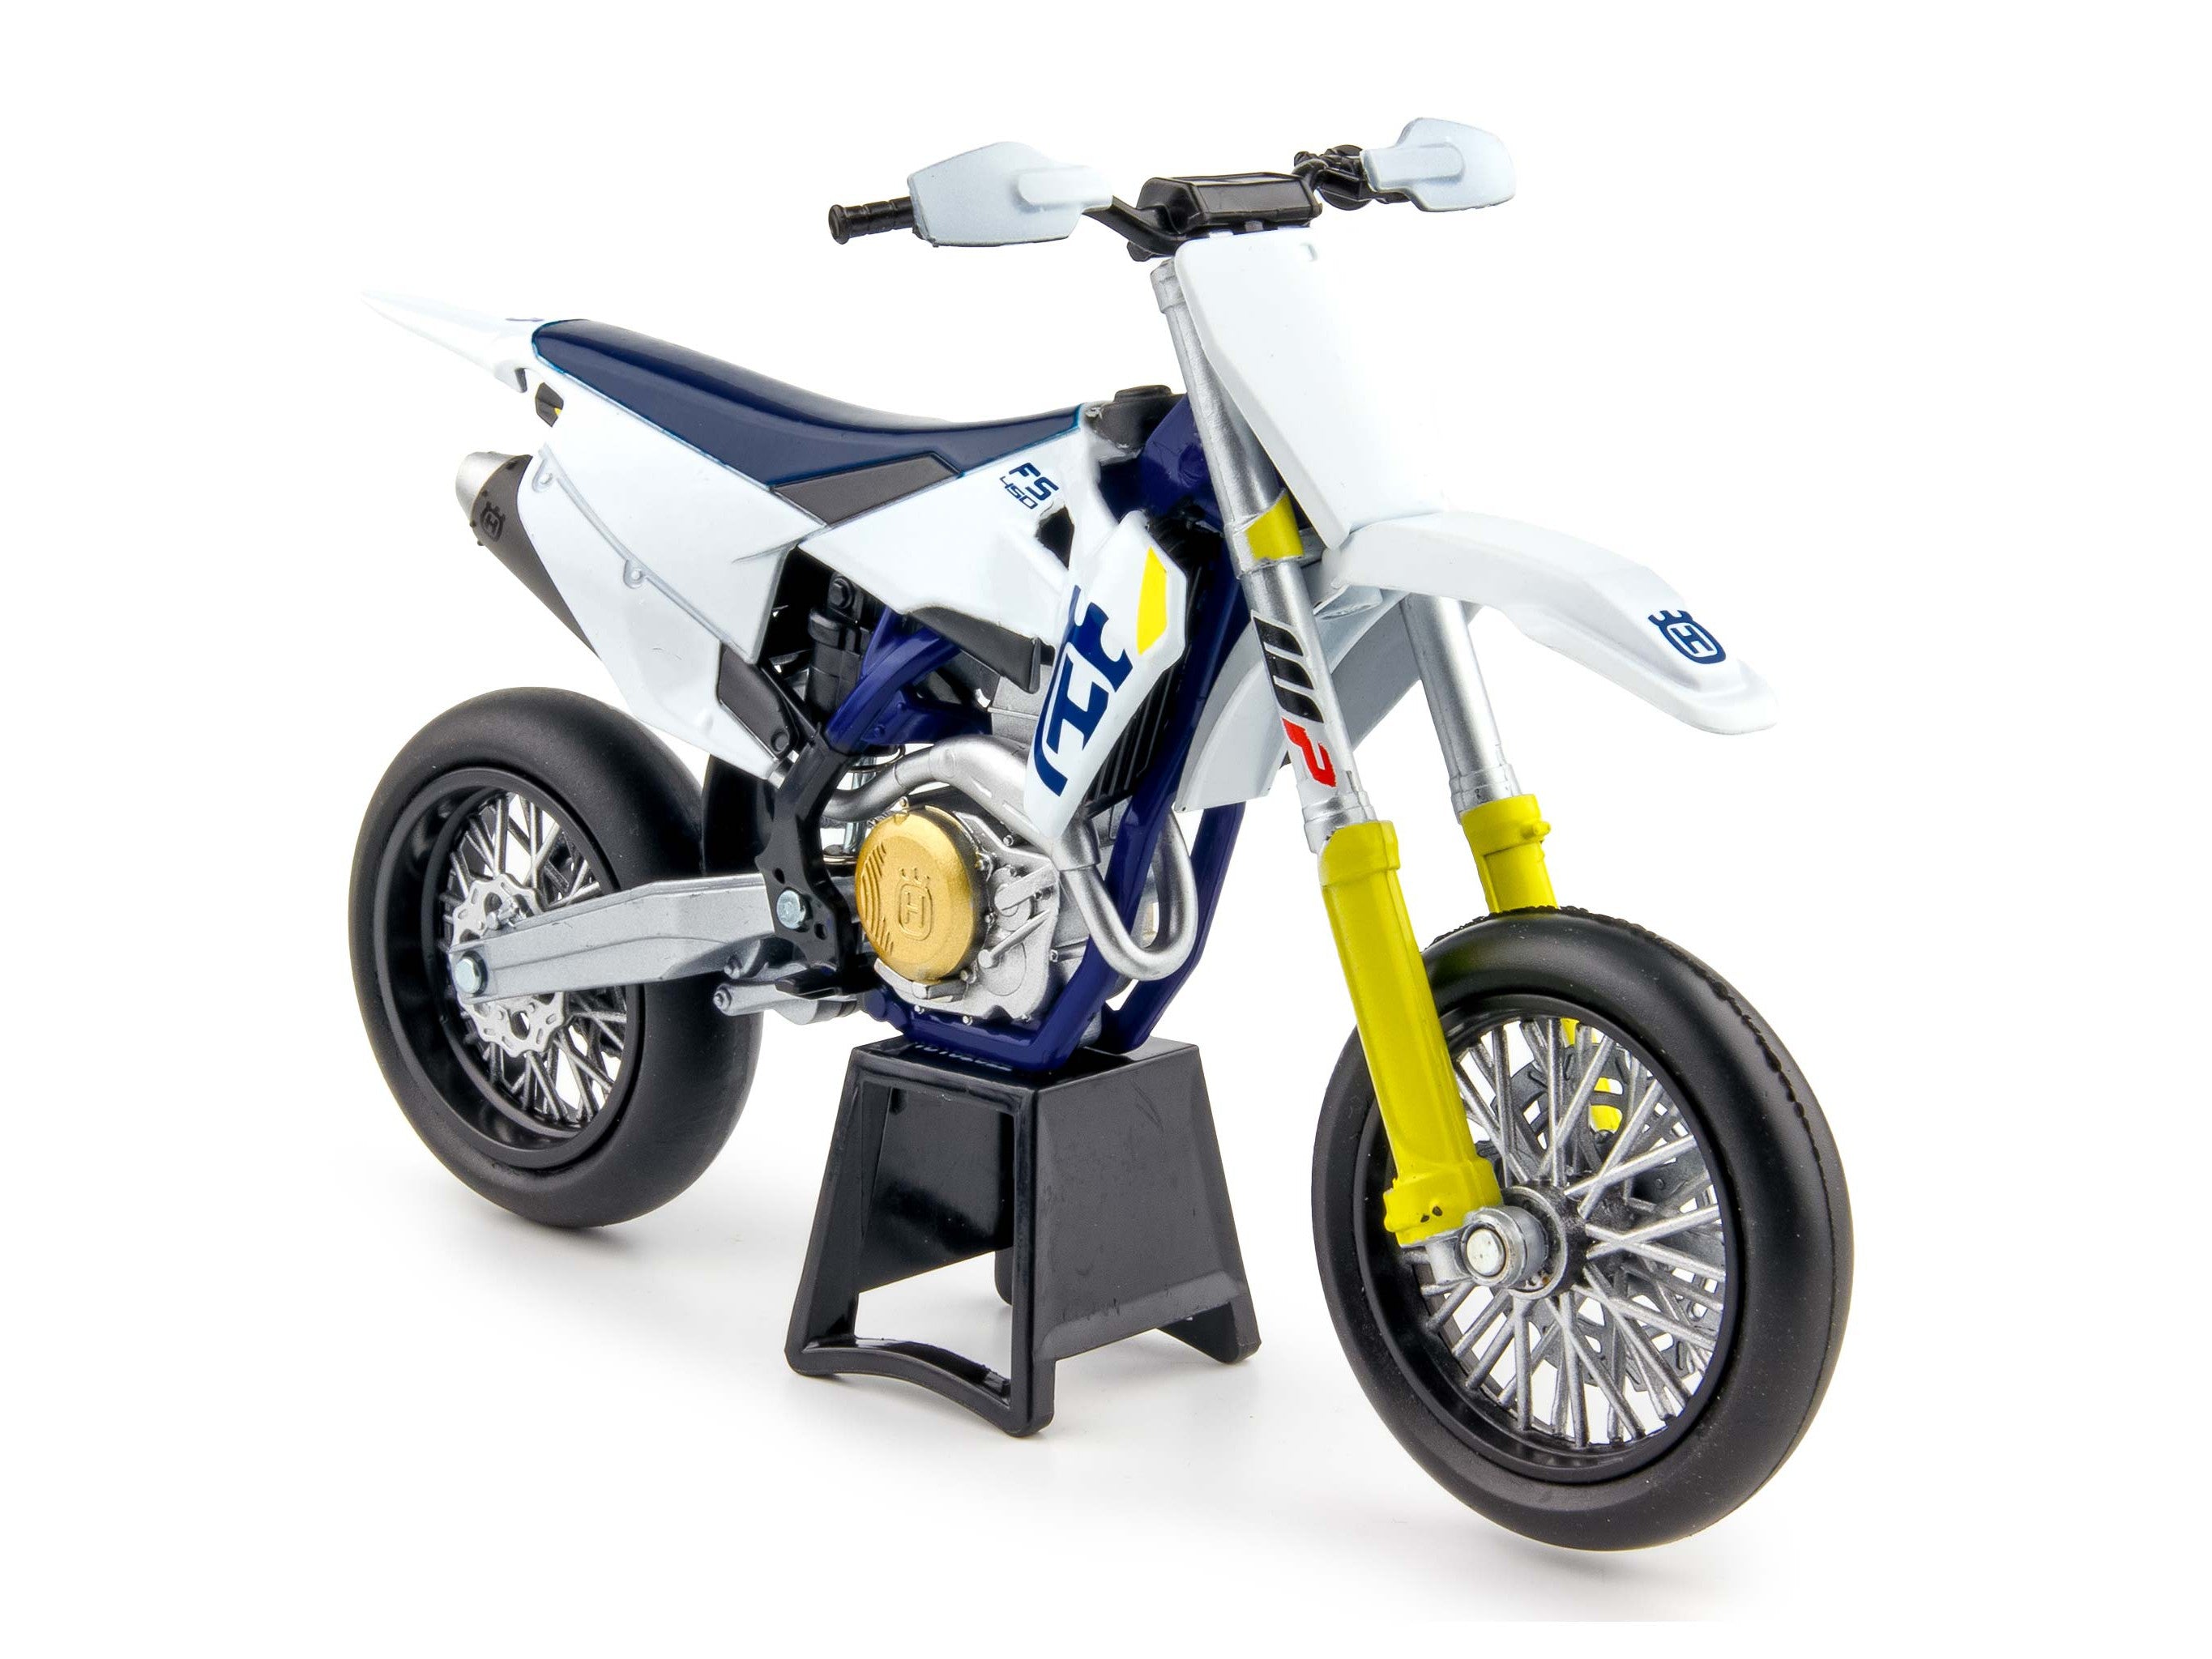 Husqvarna FS 450 2019 white - 1:12 Scale Diecast Model Motorcycle